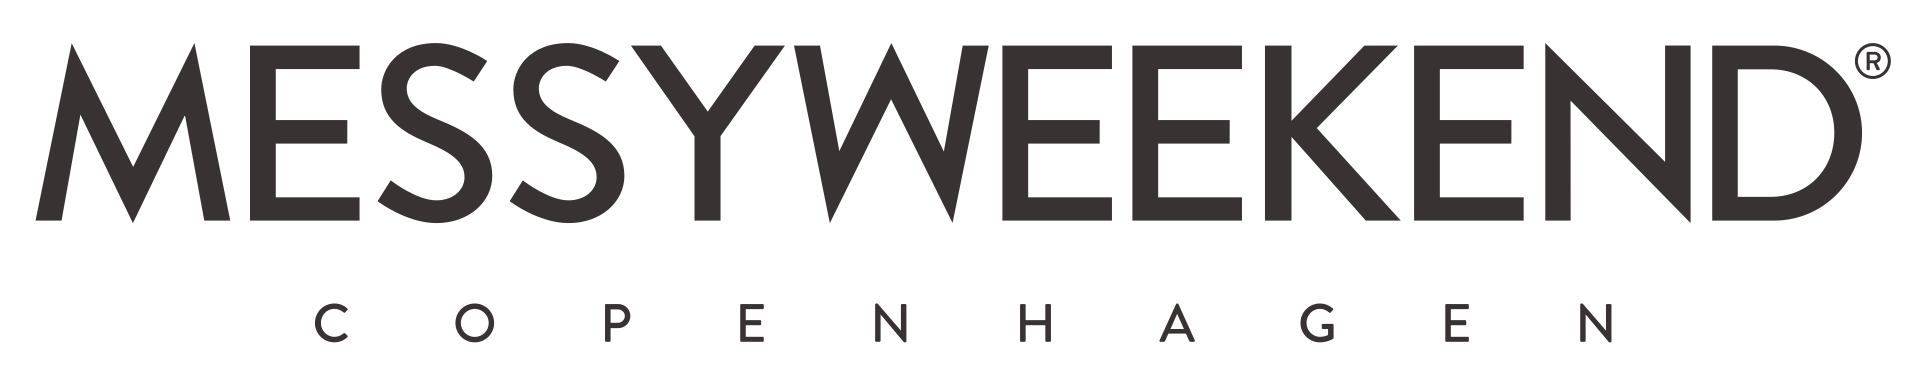 MESSYWEEKEND Support (Copy) logo